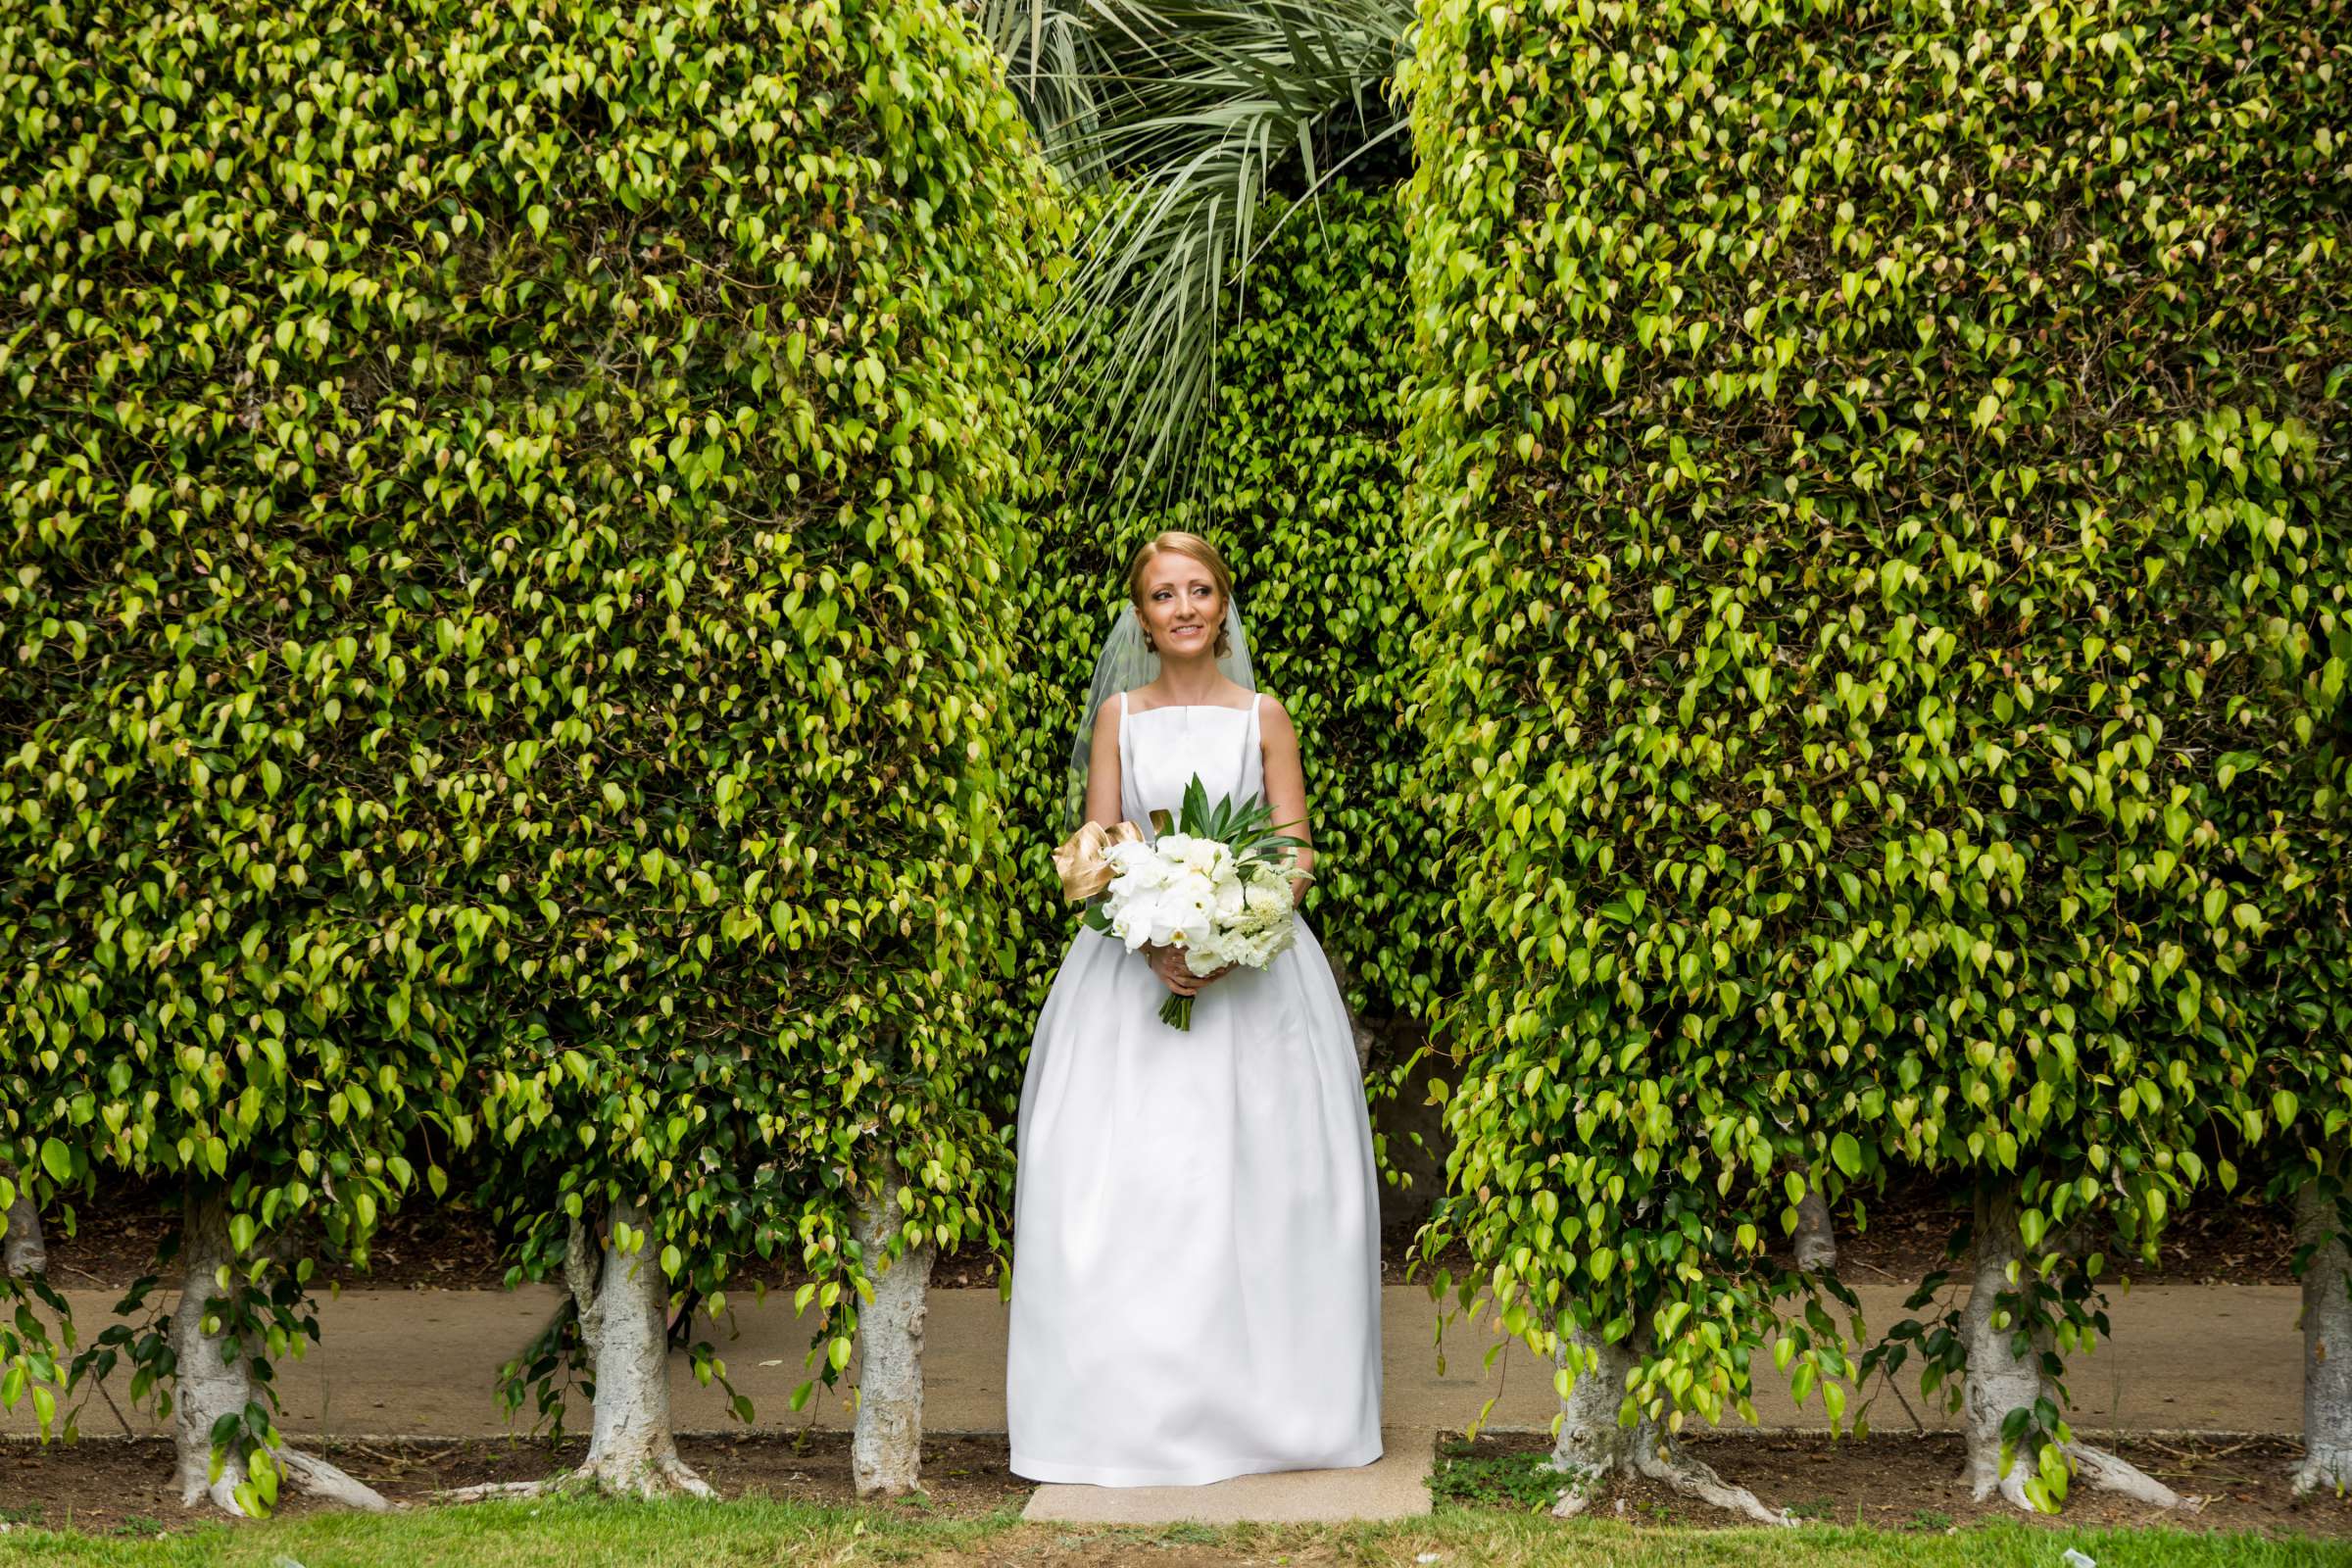 Hilton La Jolla Torrey Pines Wedding, Aubrey and Michael Wedding Photo #9 by True Photography